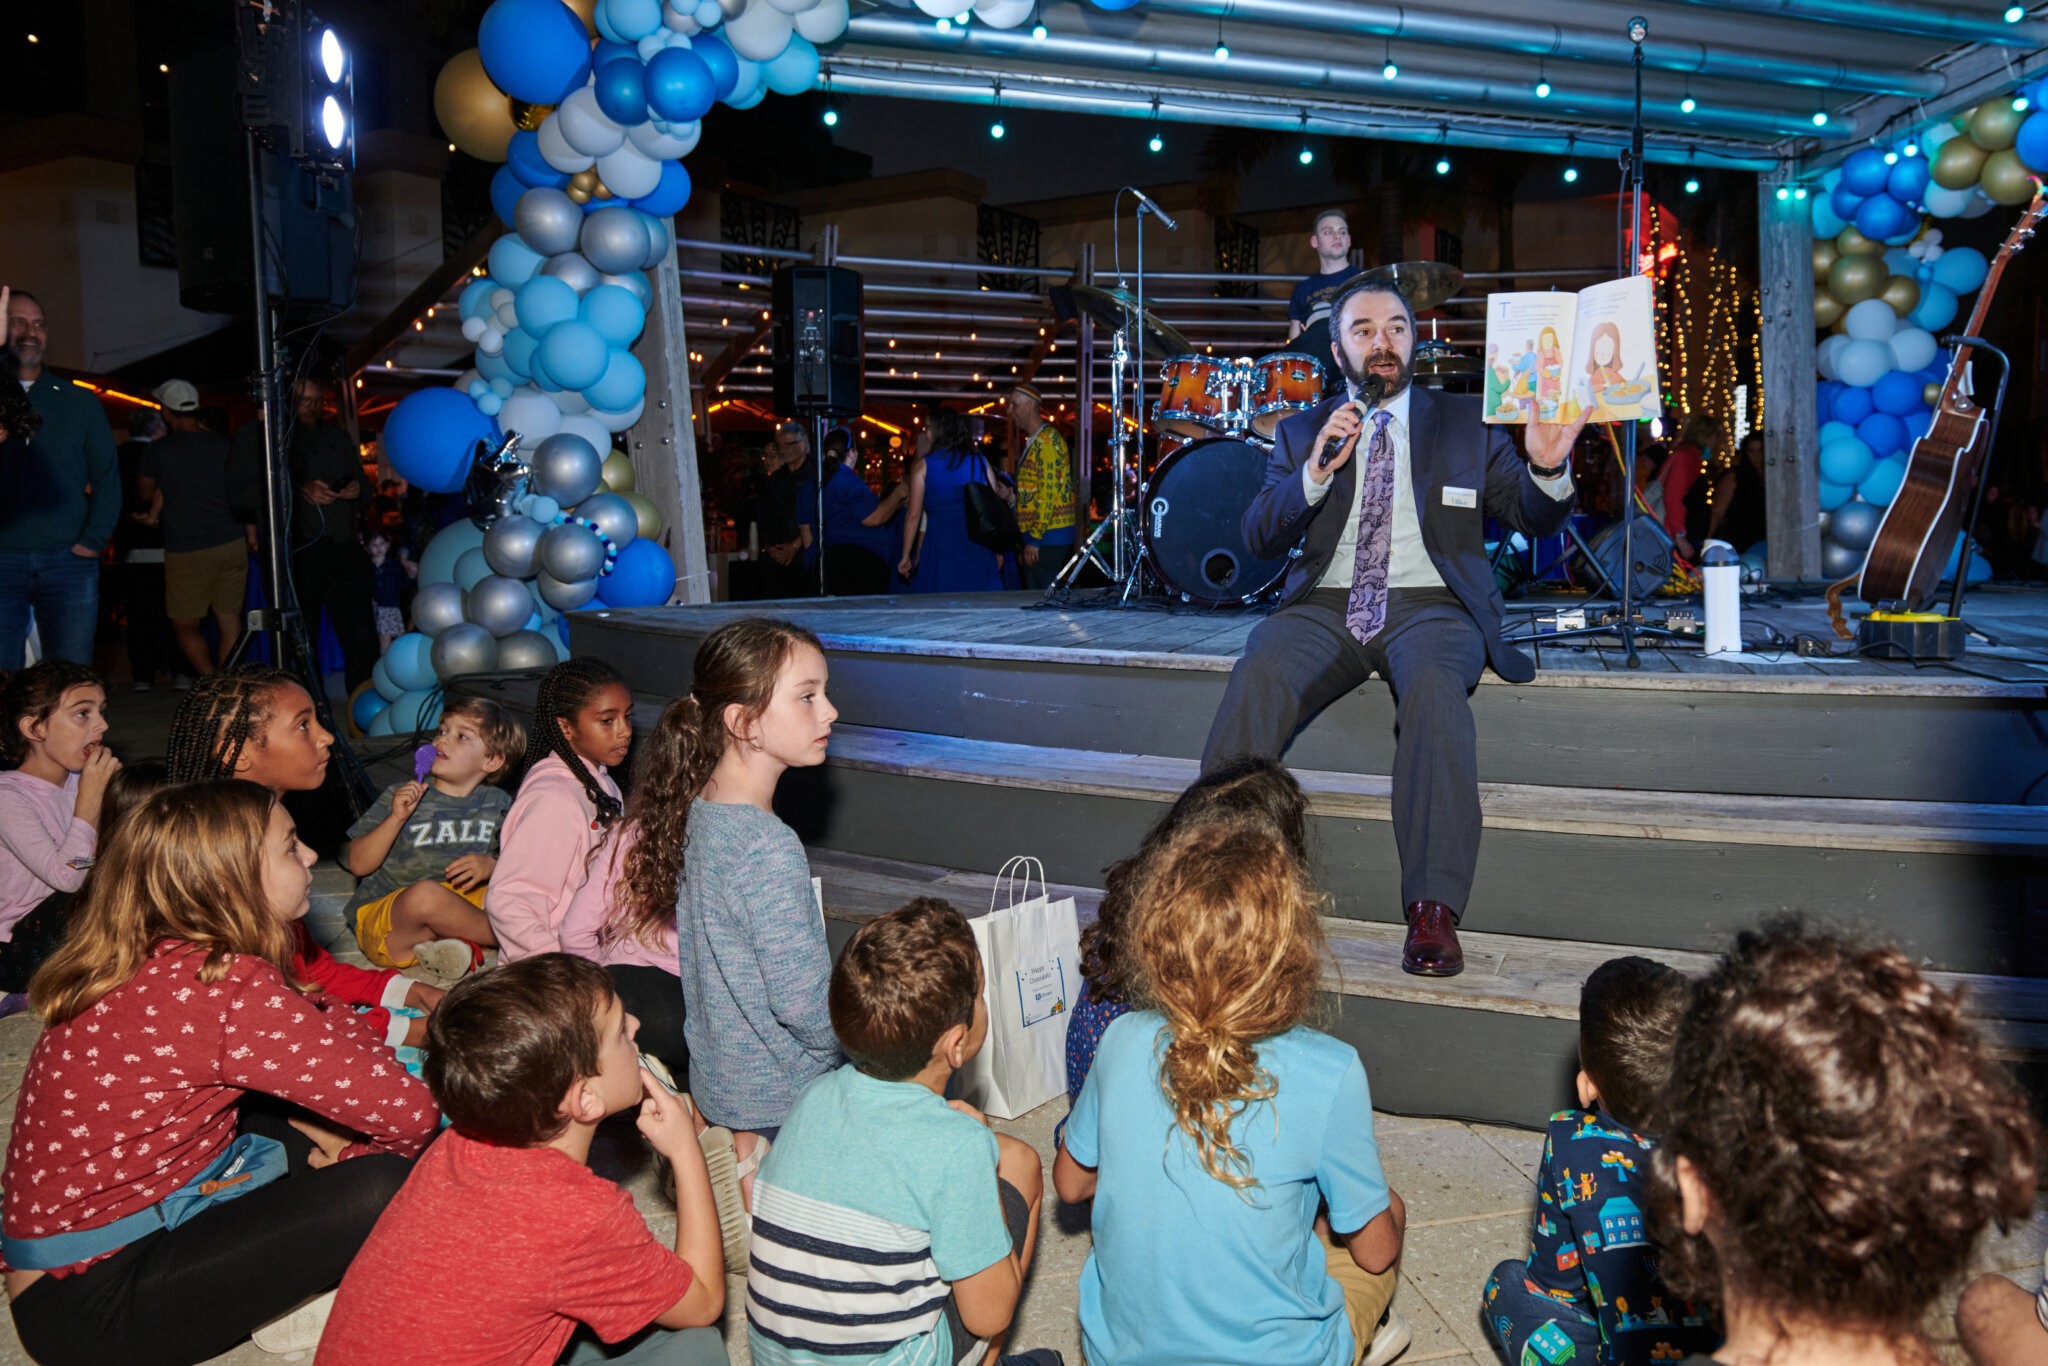 Rabbi Greg Weisman reads to kids at the Community-wide Chanukah Celebration in Boca